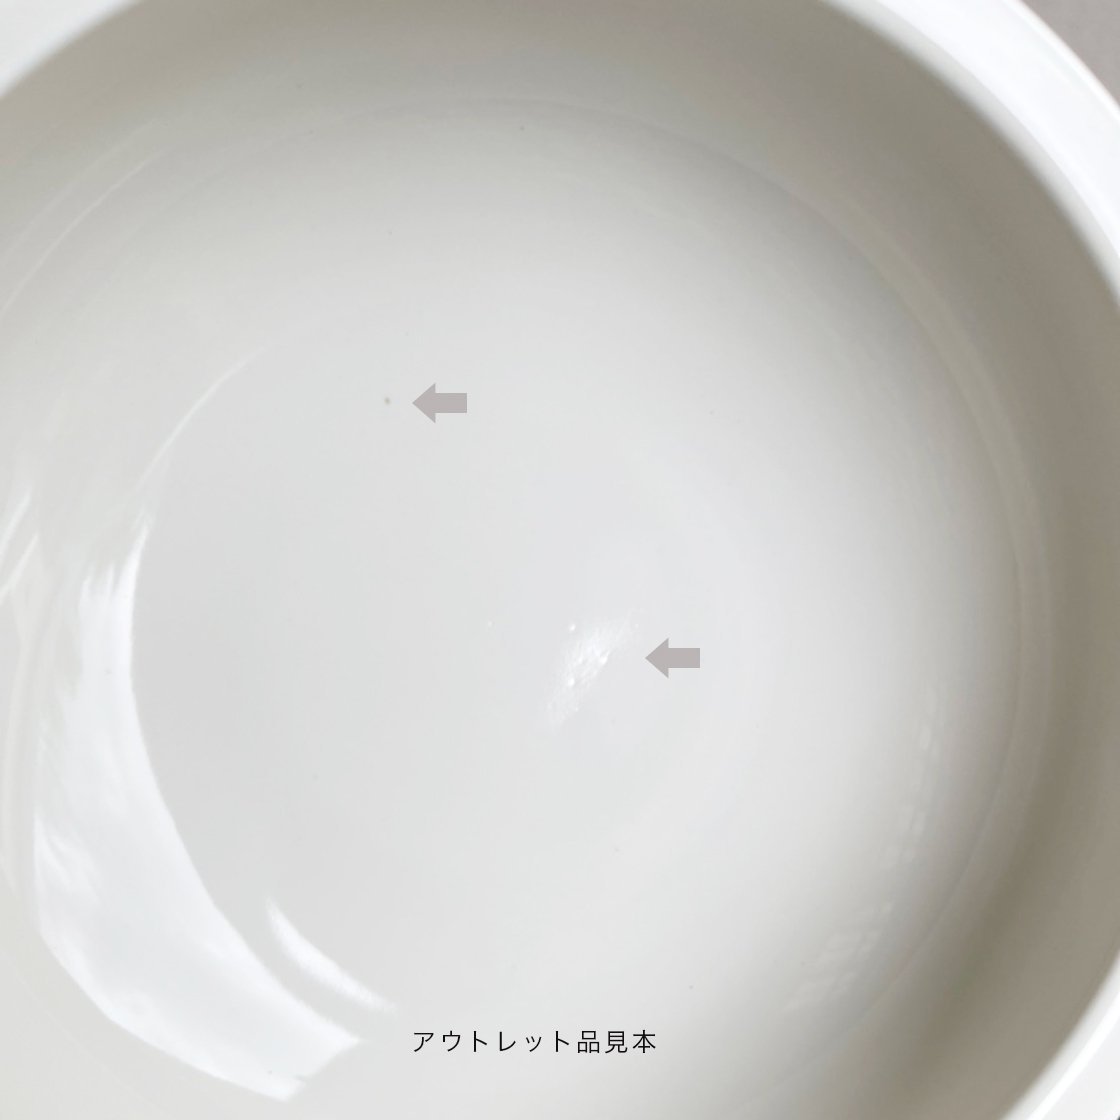 Classy Bowl【5インチ】グレイッシュピンク Made in Japan